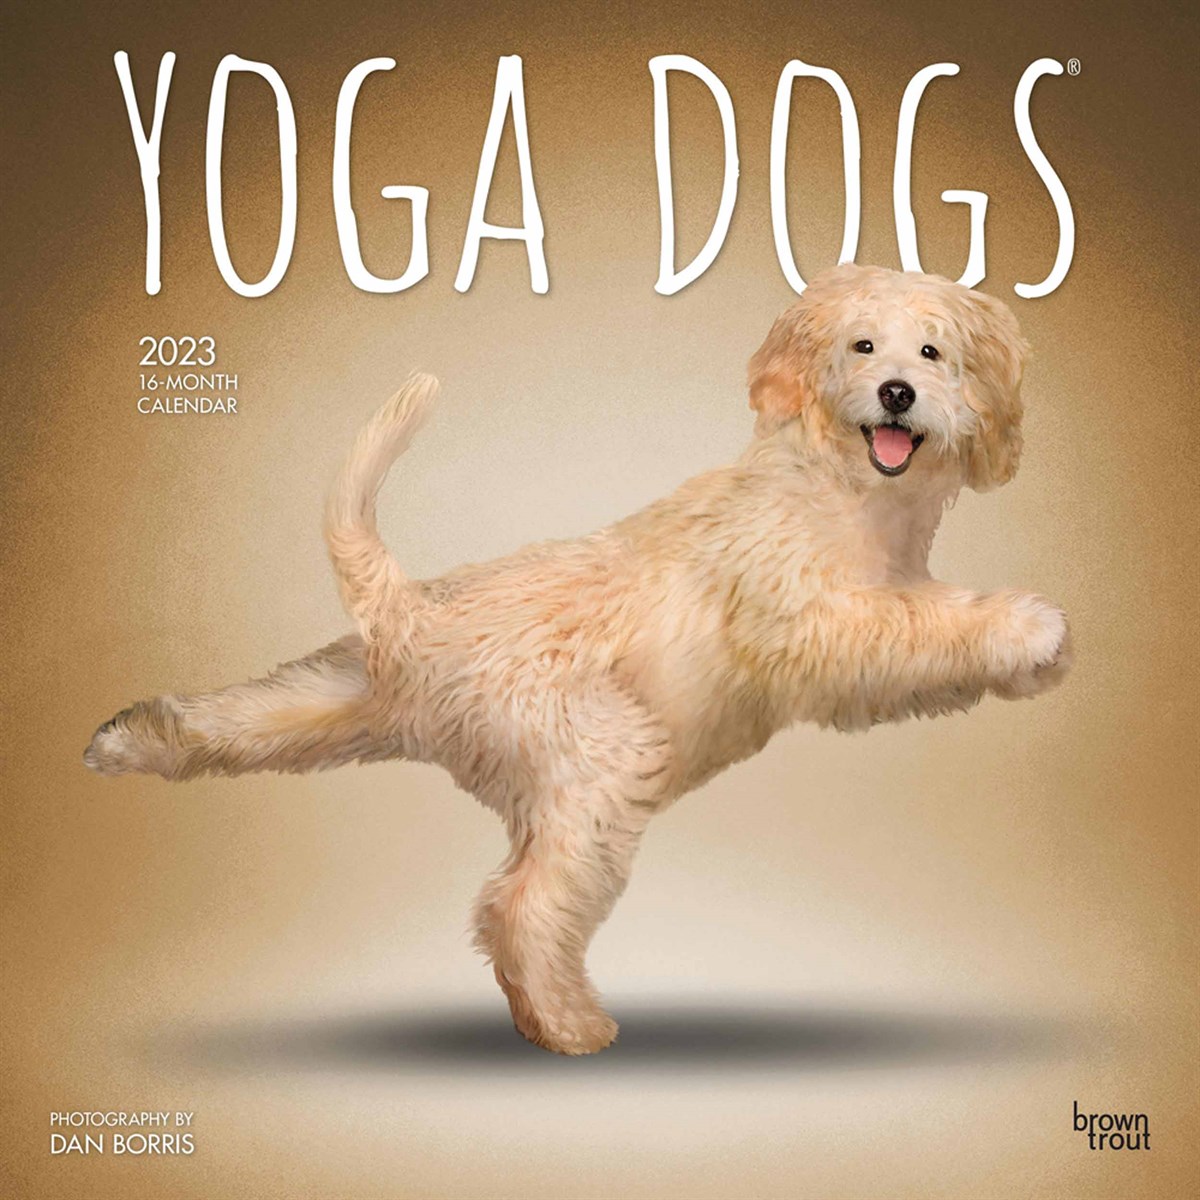 Yoga Dogs 2023 Calendars